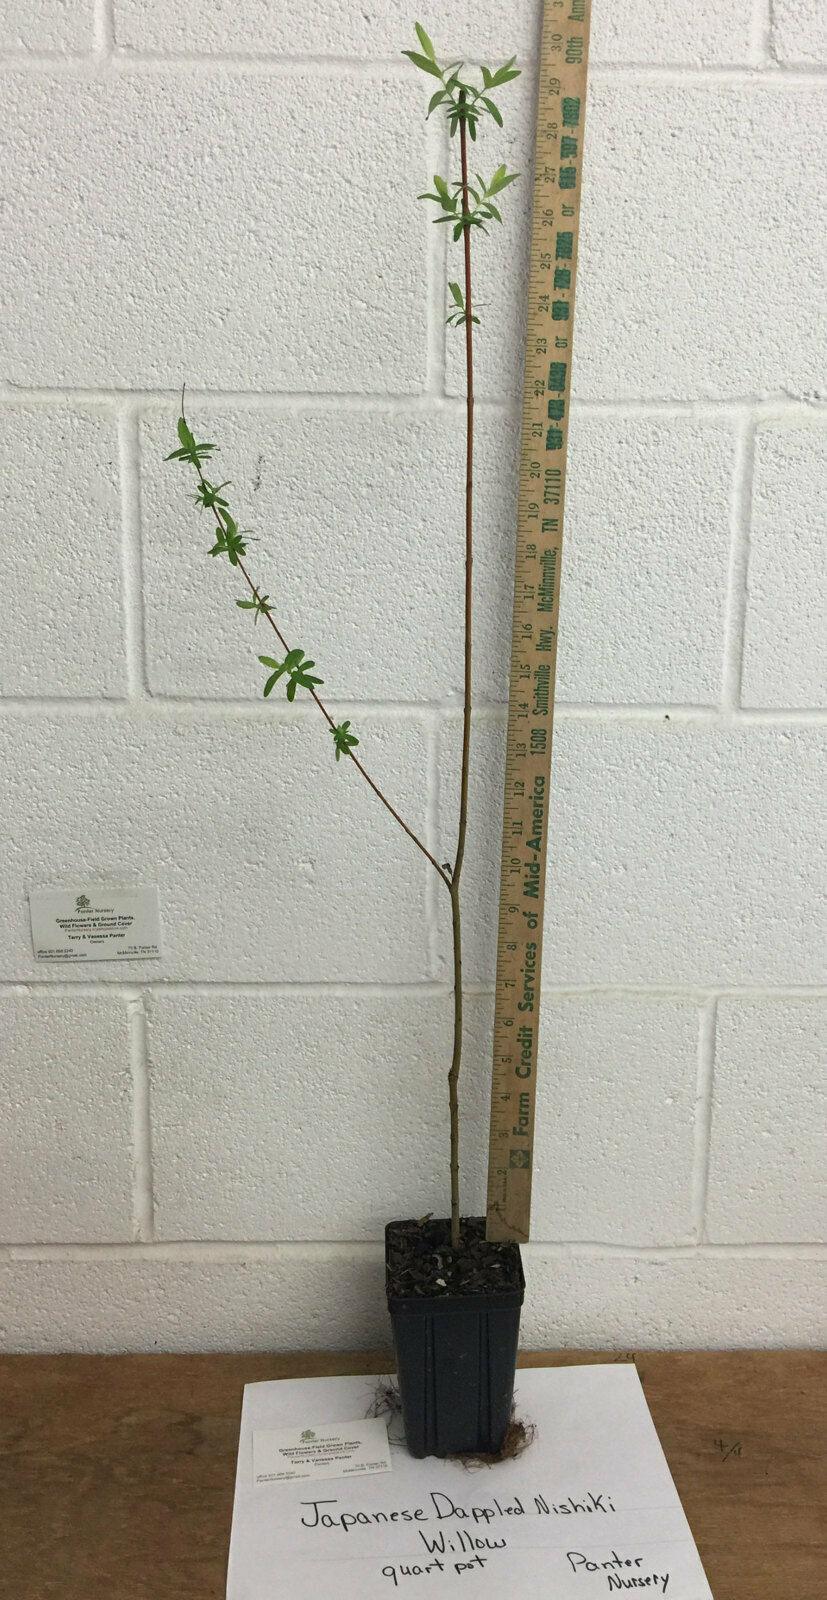 2 Japanese Nishiki Dappled Willow Shrubs/Trees - 8-12" Tall Live Plants - 4" Pot - The Nursery Center